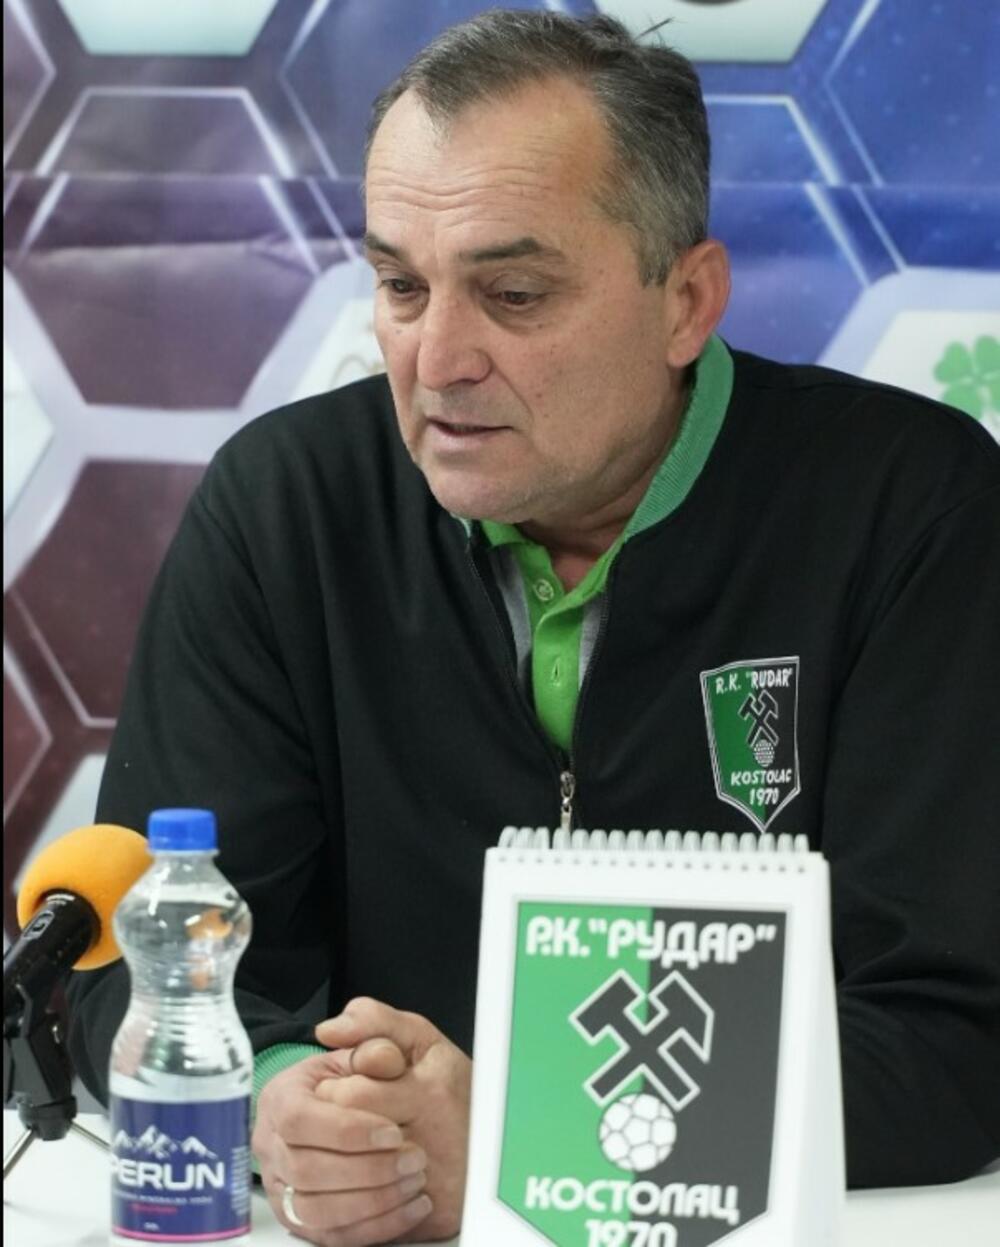 Dragan Ajdačić